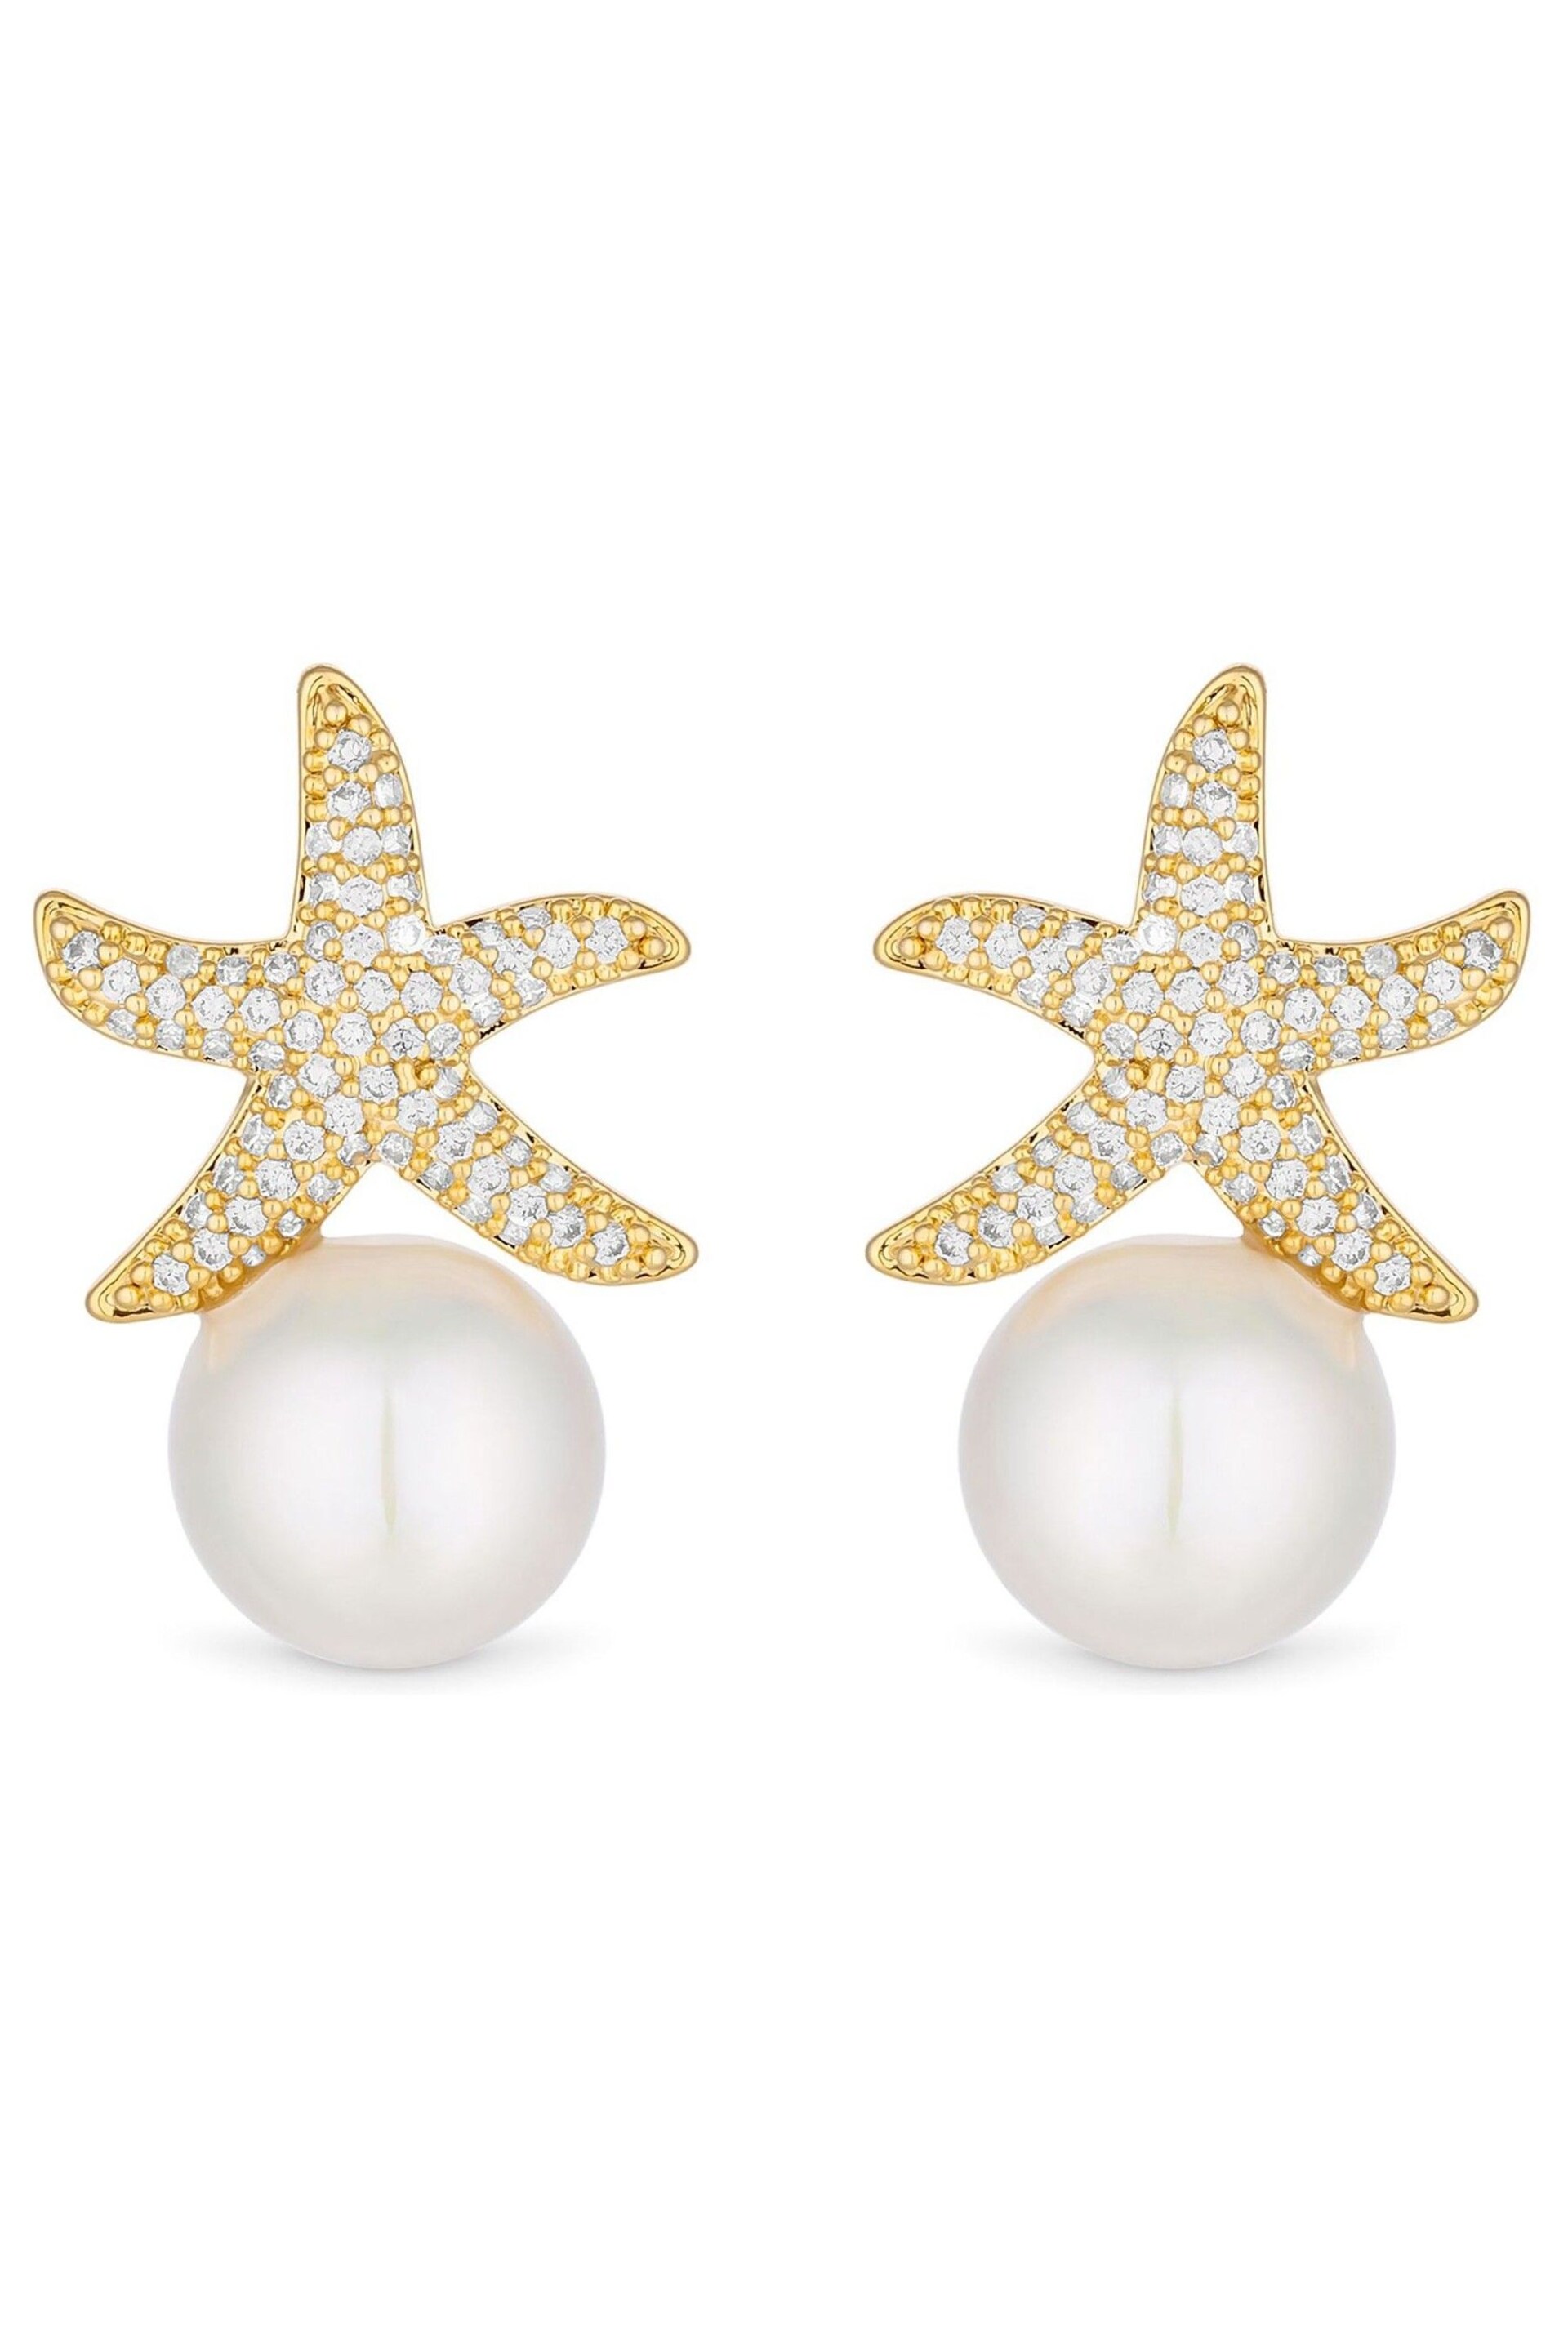 Jon Richard Gold Tone Cubic Zirconia Starfish Pearl Drop Stud Earrings - Image 1 of 1